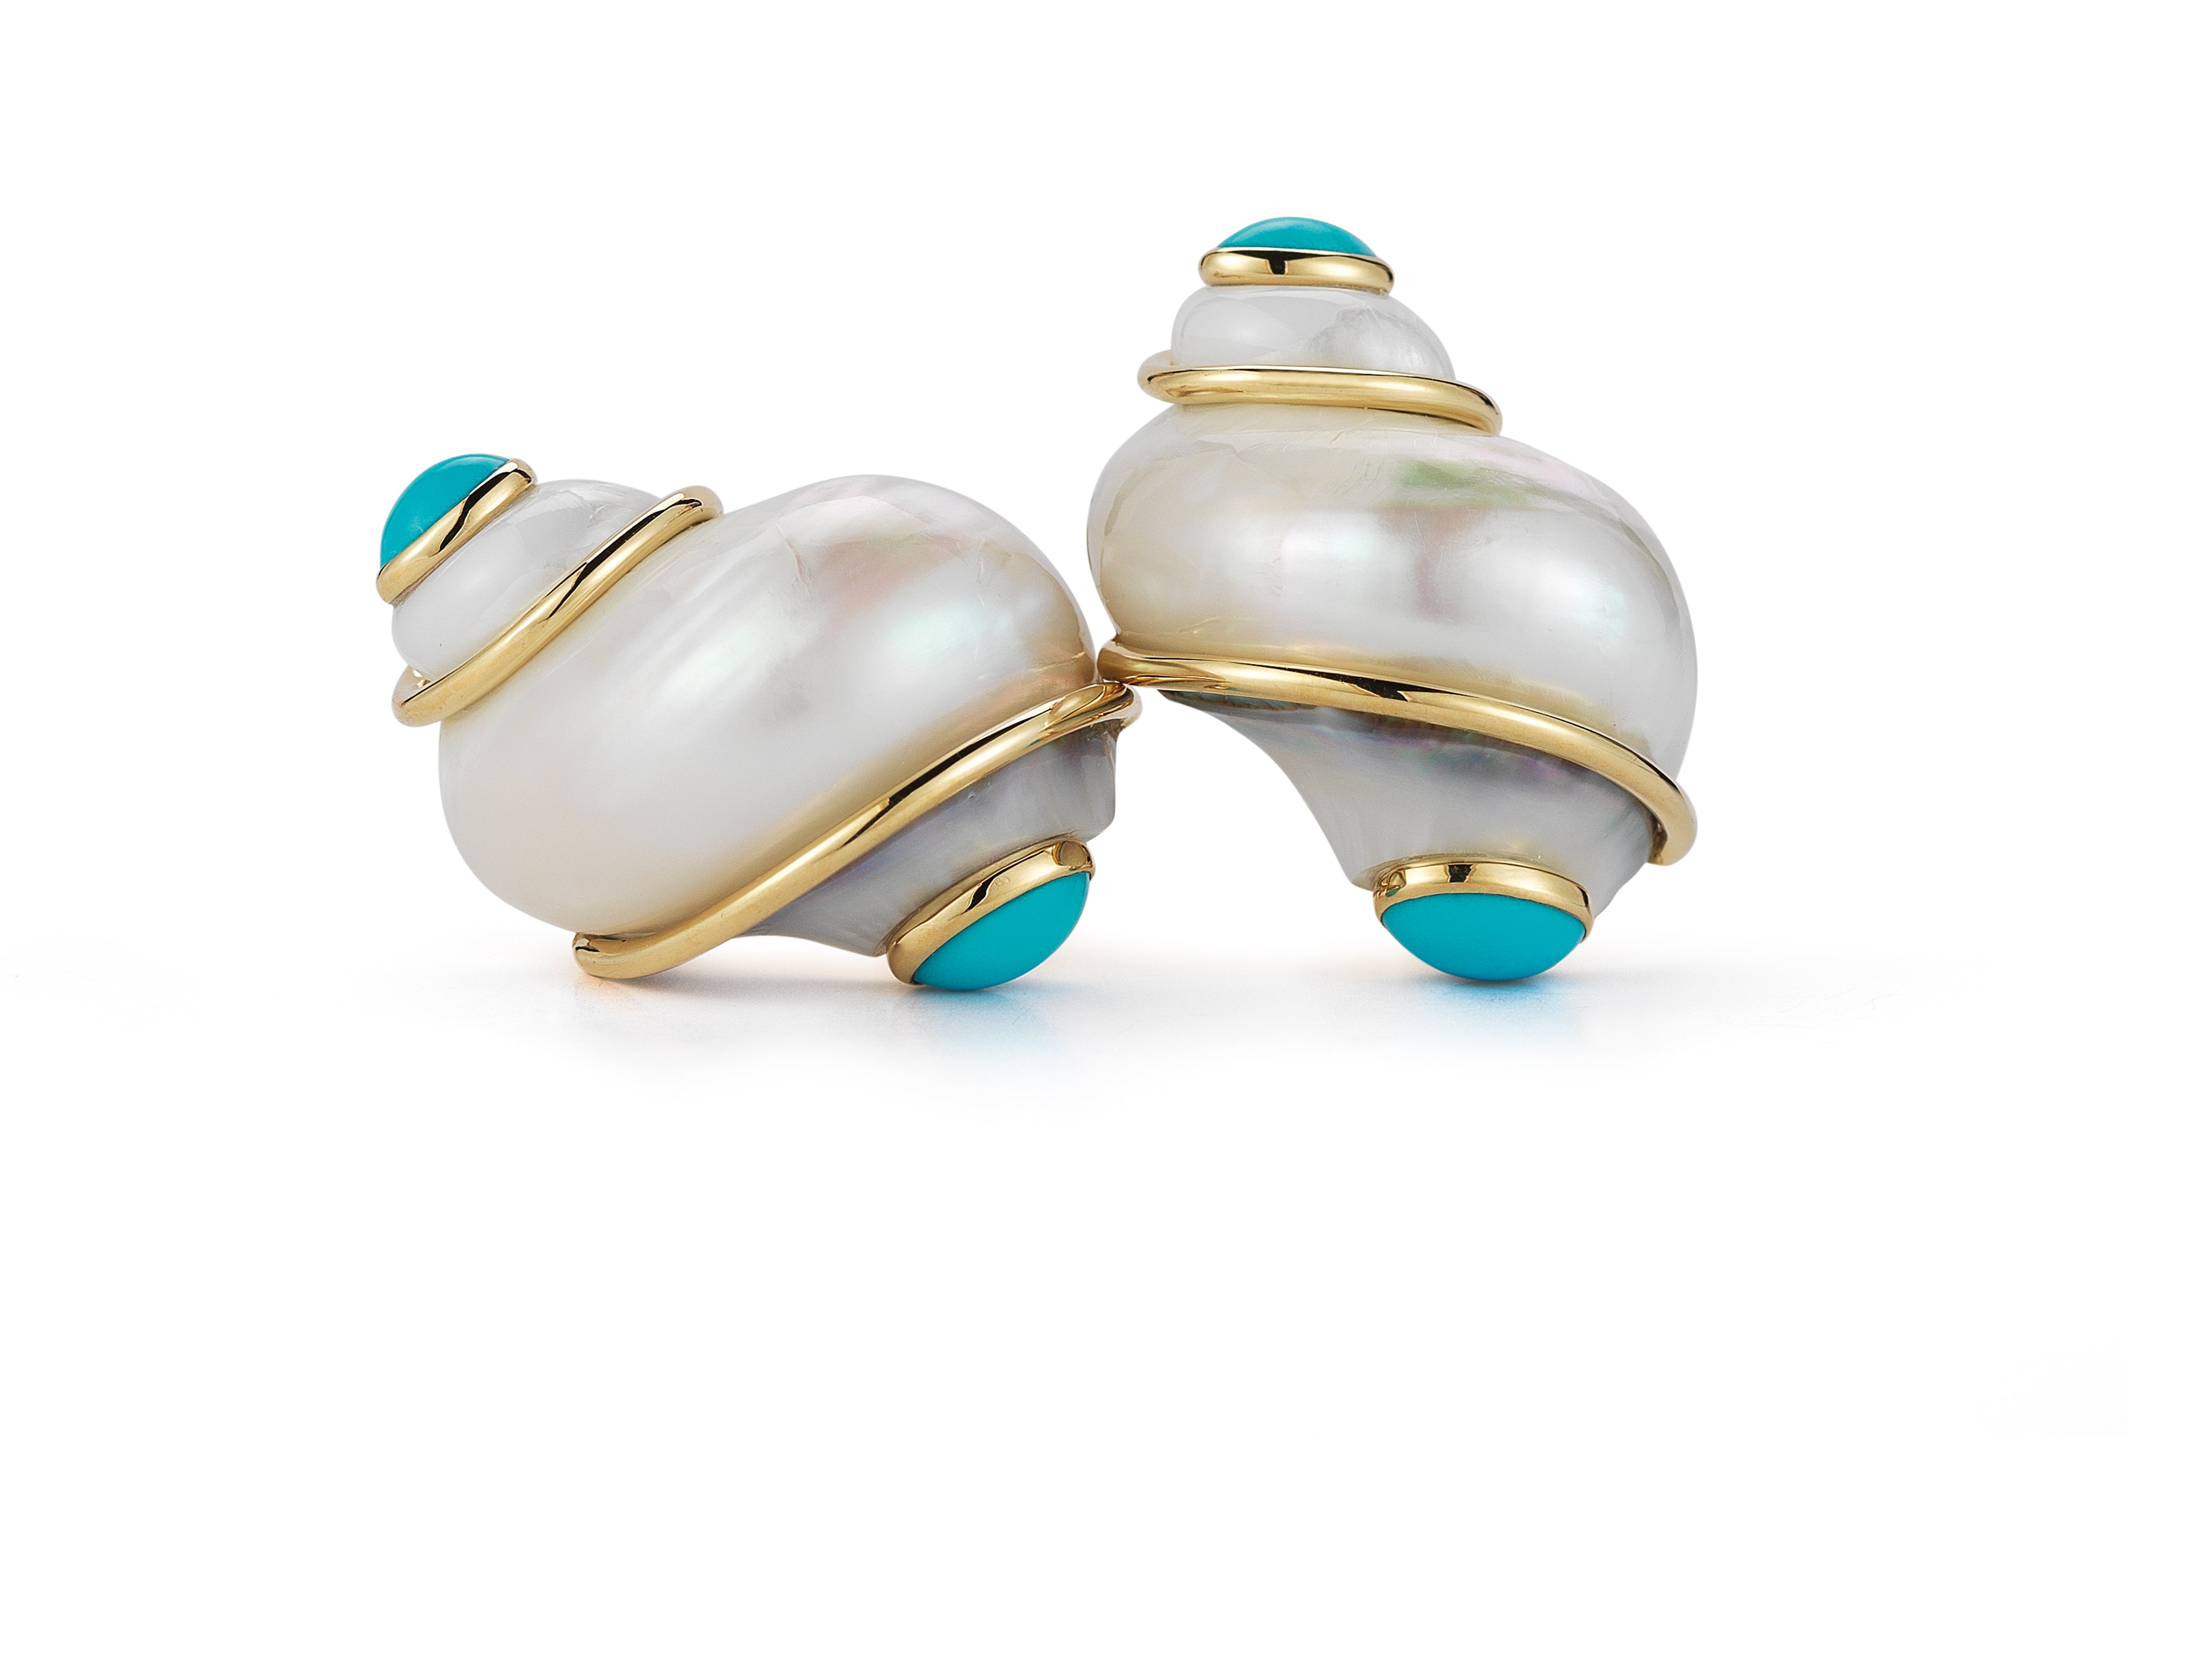 Turbo Shell Earrings in Turquoise